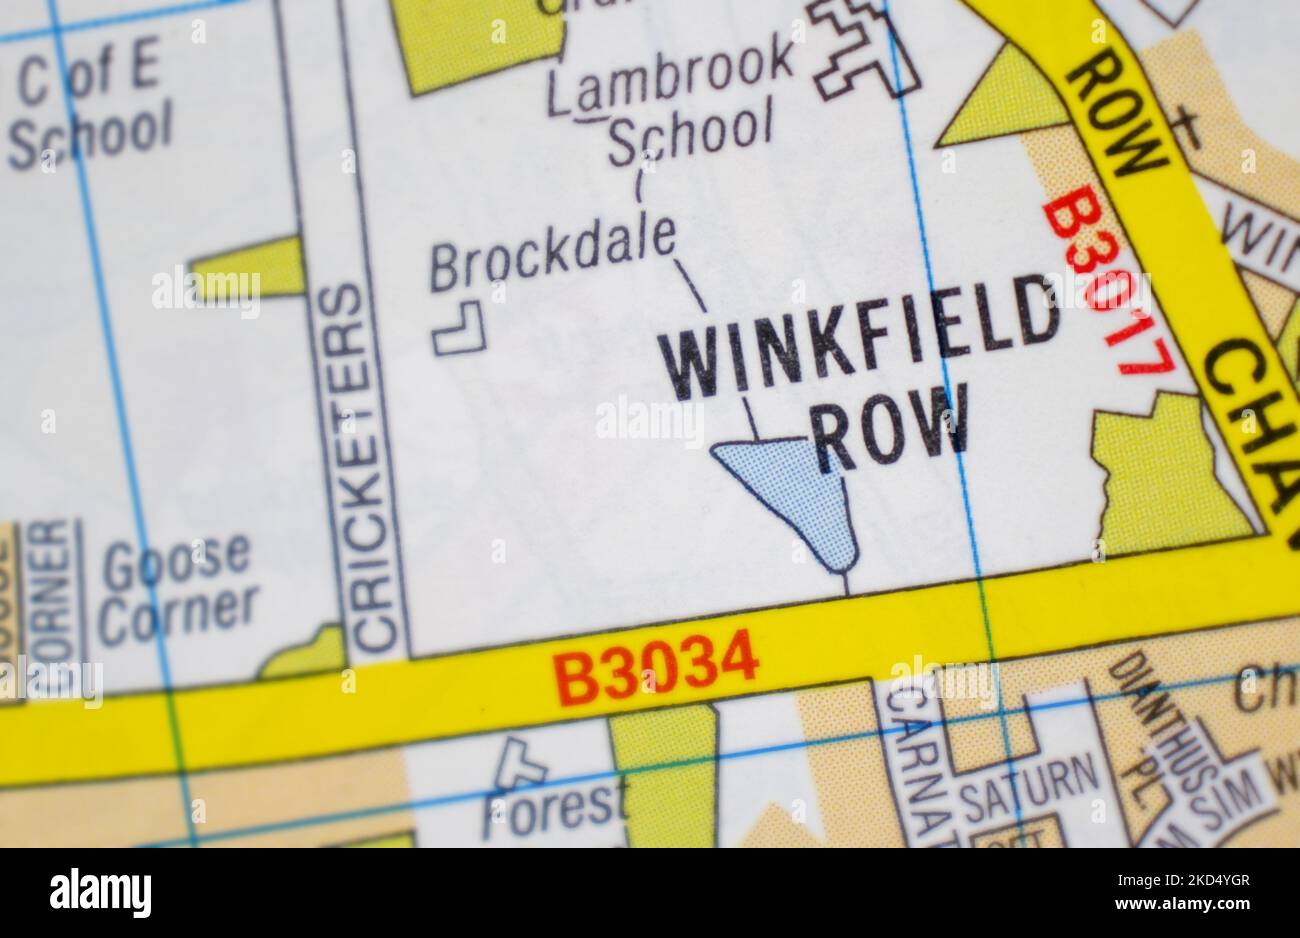 Winkfield Row village - Berkshire, United Kingdom colour atlas map town name Stock Photo